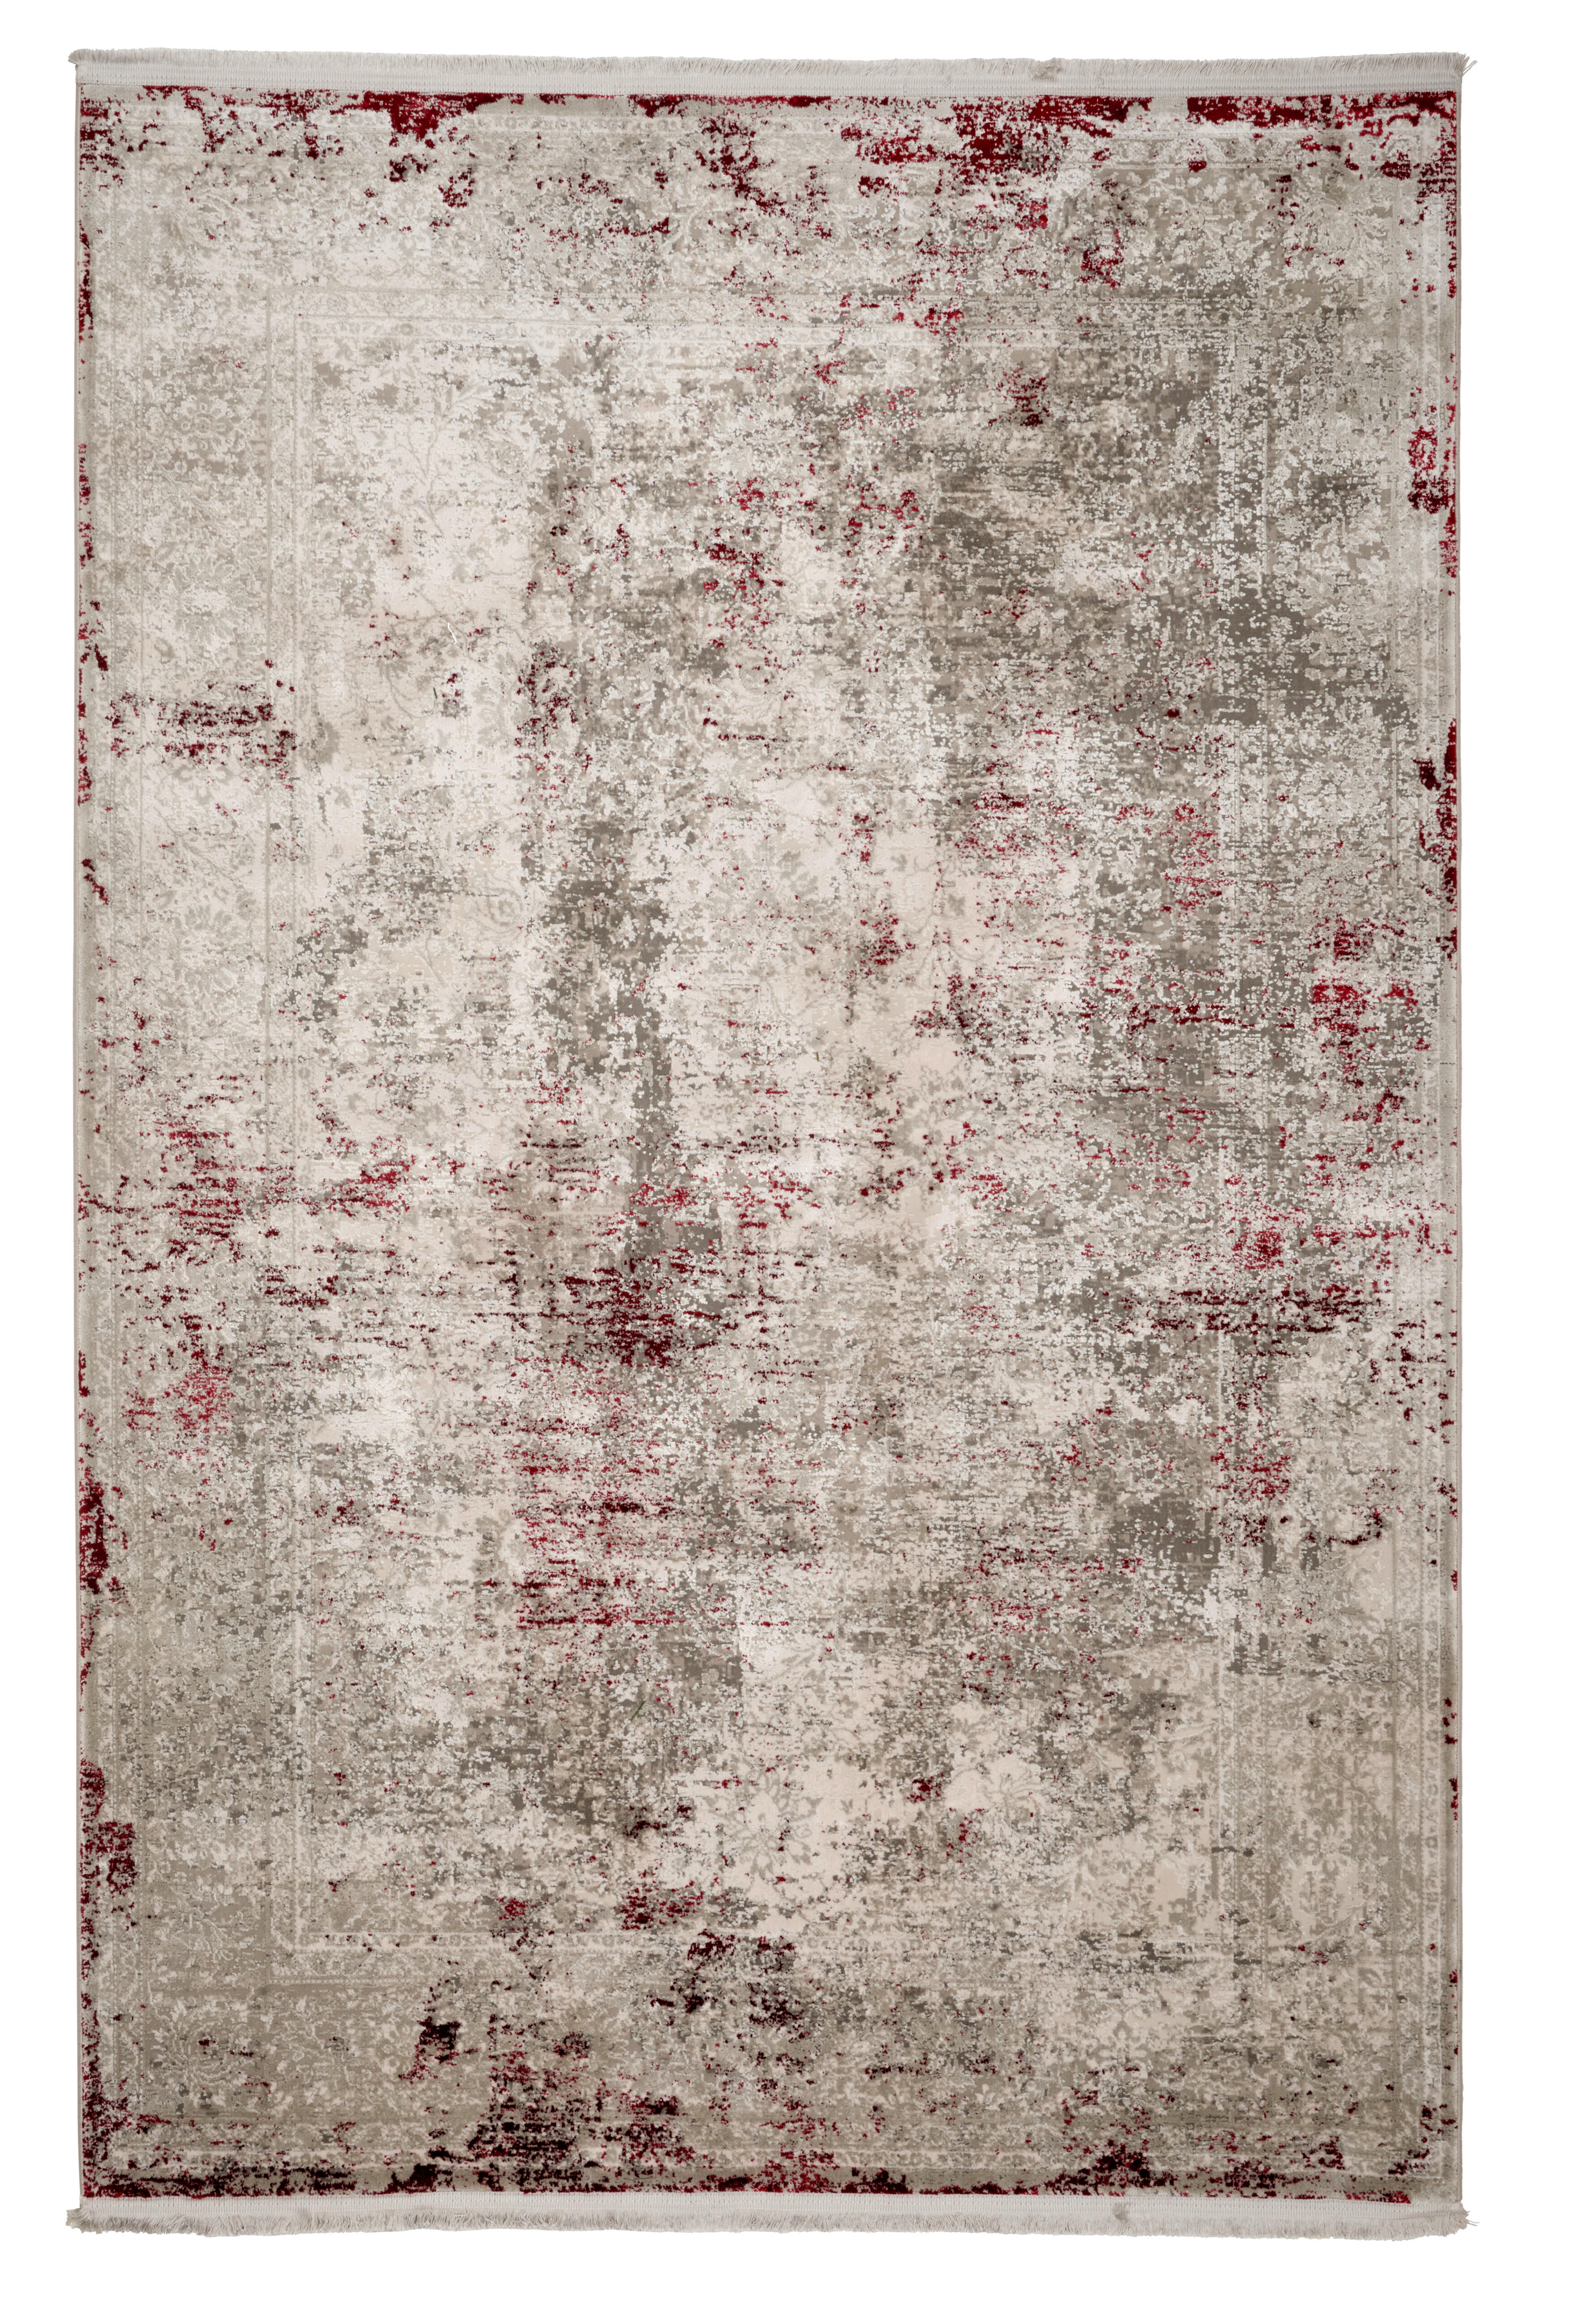 VINTAGE-TEPPICH  80/150 cm  Rot   - Rot, Design, Naturmaterialien/Textil (80/150cm) - Dieter Knoll